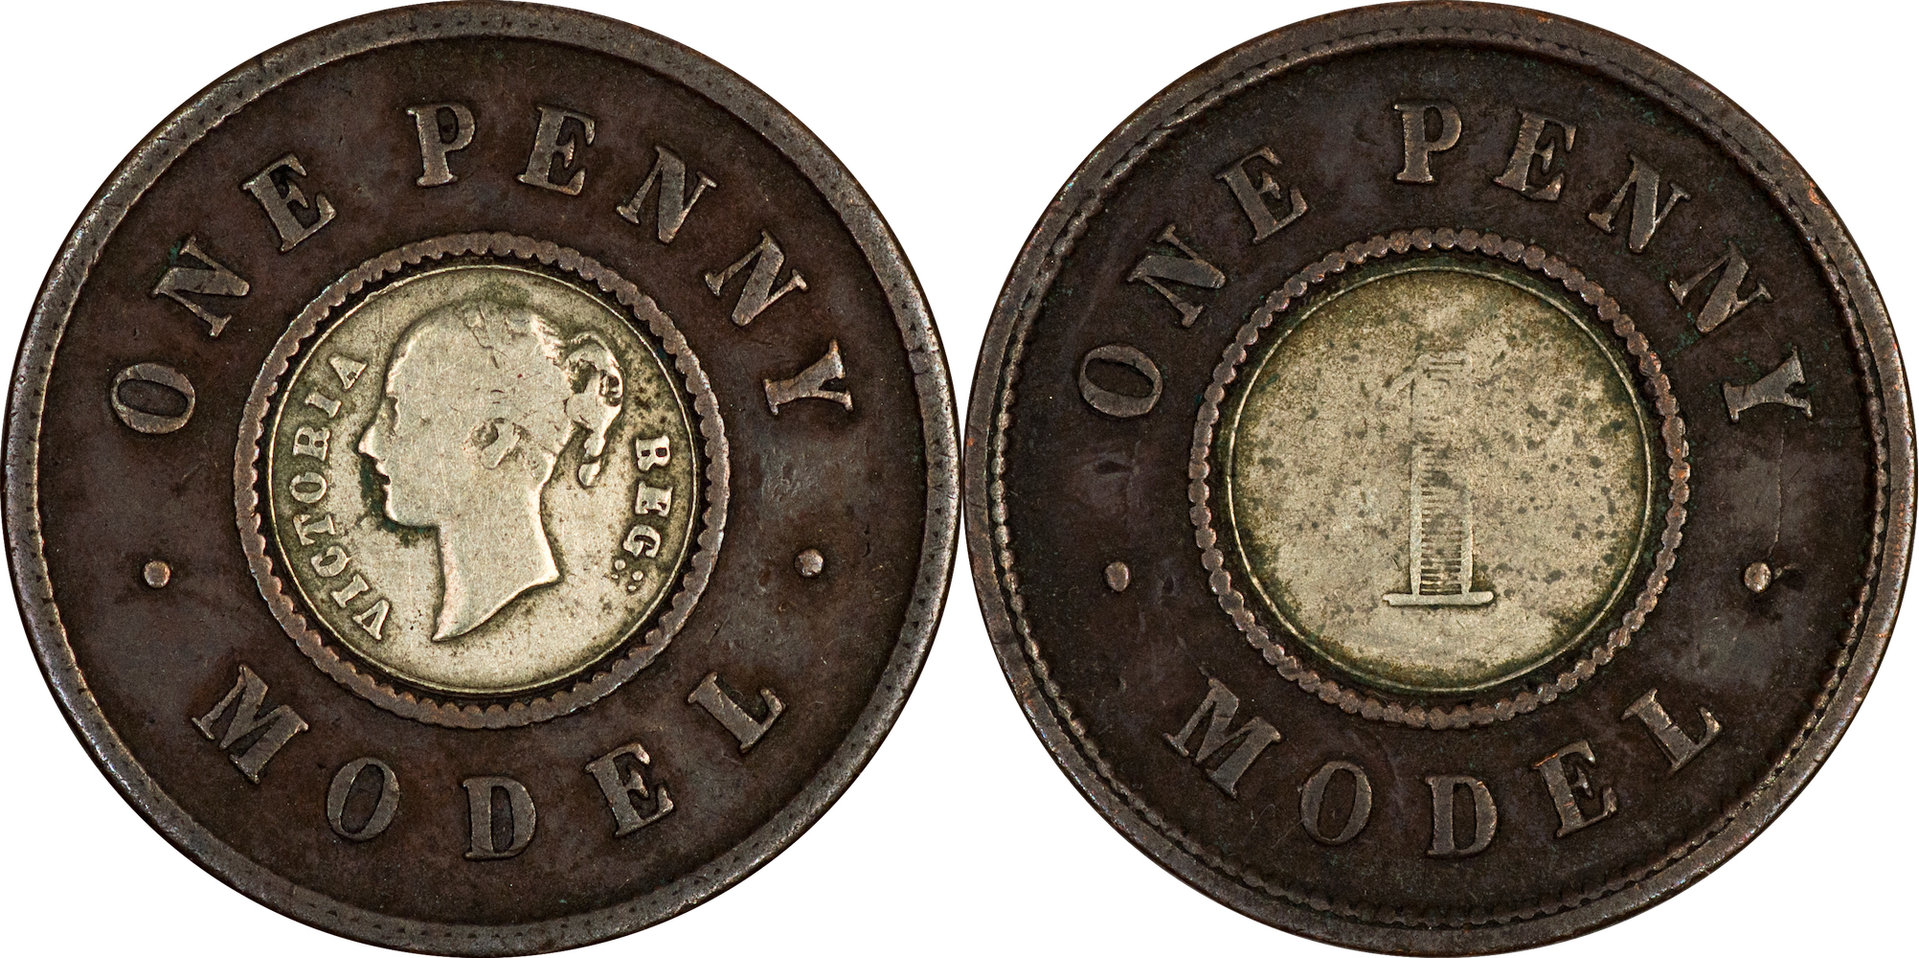 Great Britain - 1844 One Penny Model.jpg